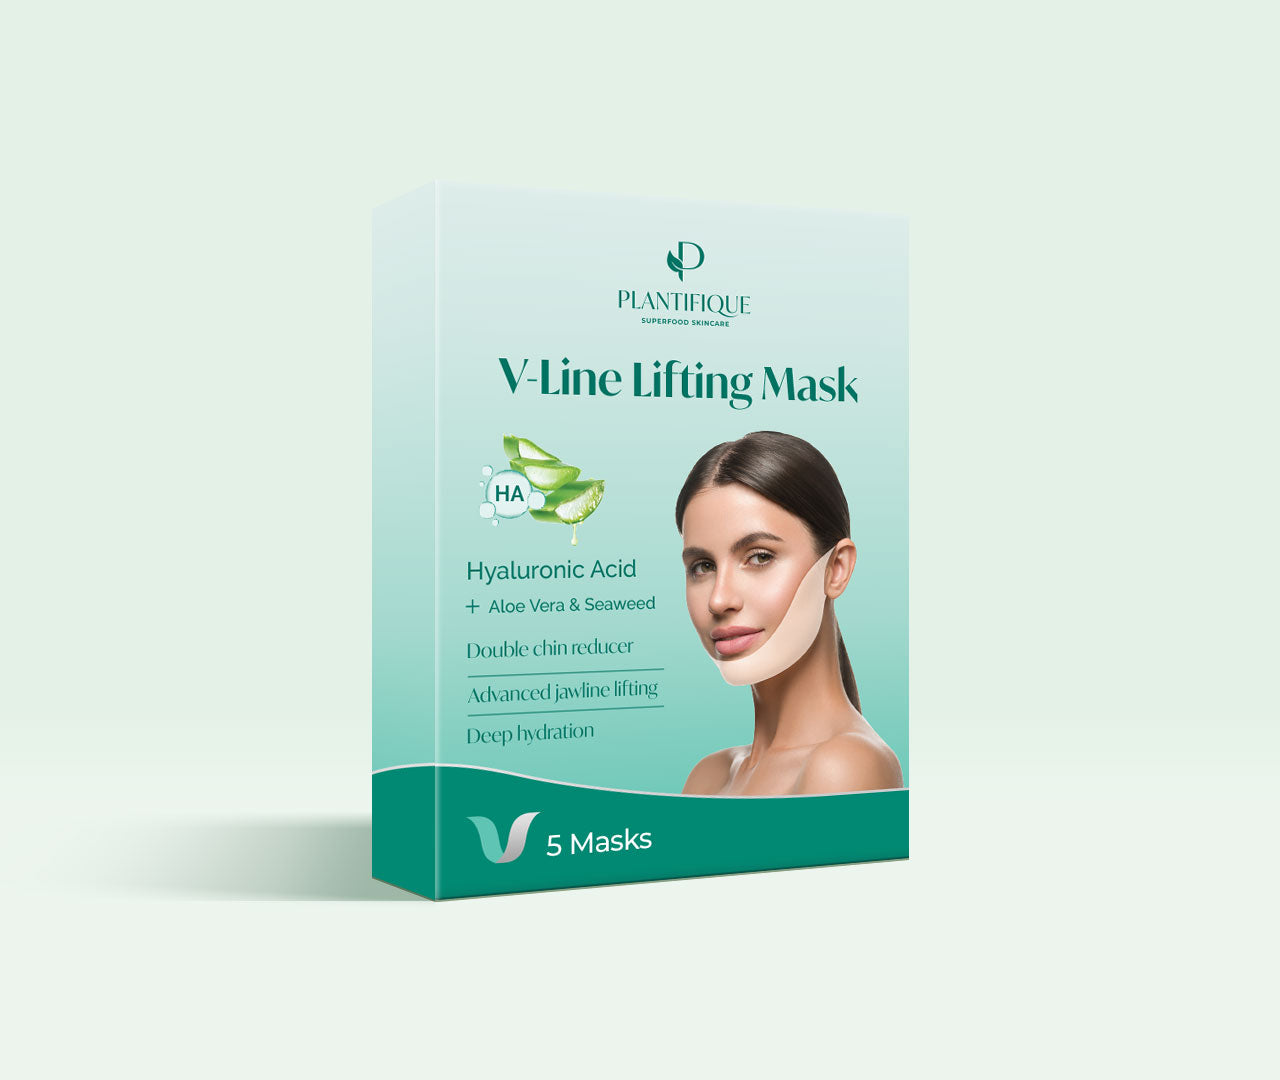 V-Line Lifting Mask